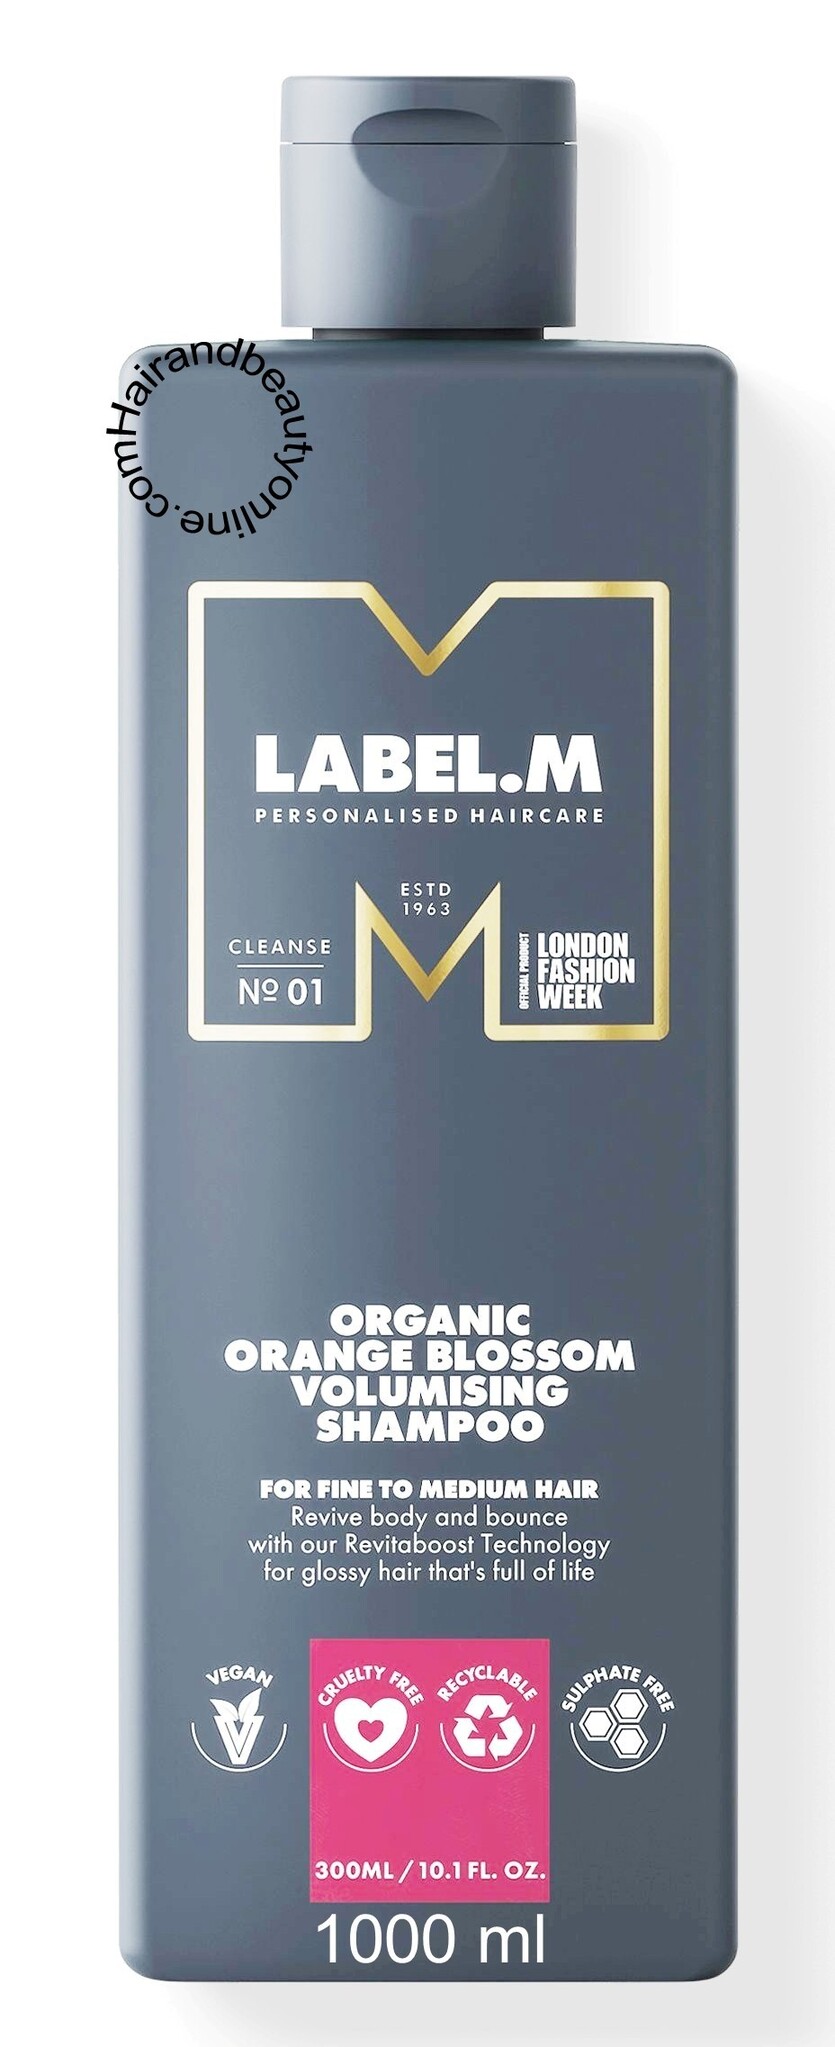 Label.m Organic Orange Blossom Volumising Shampoo 1000ml